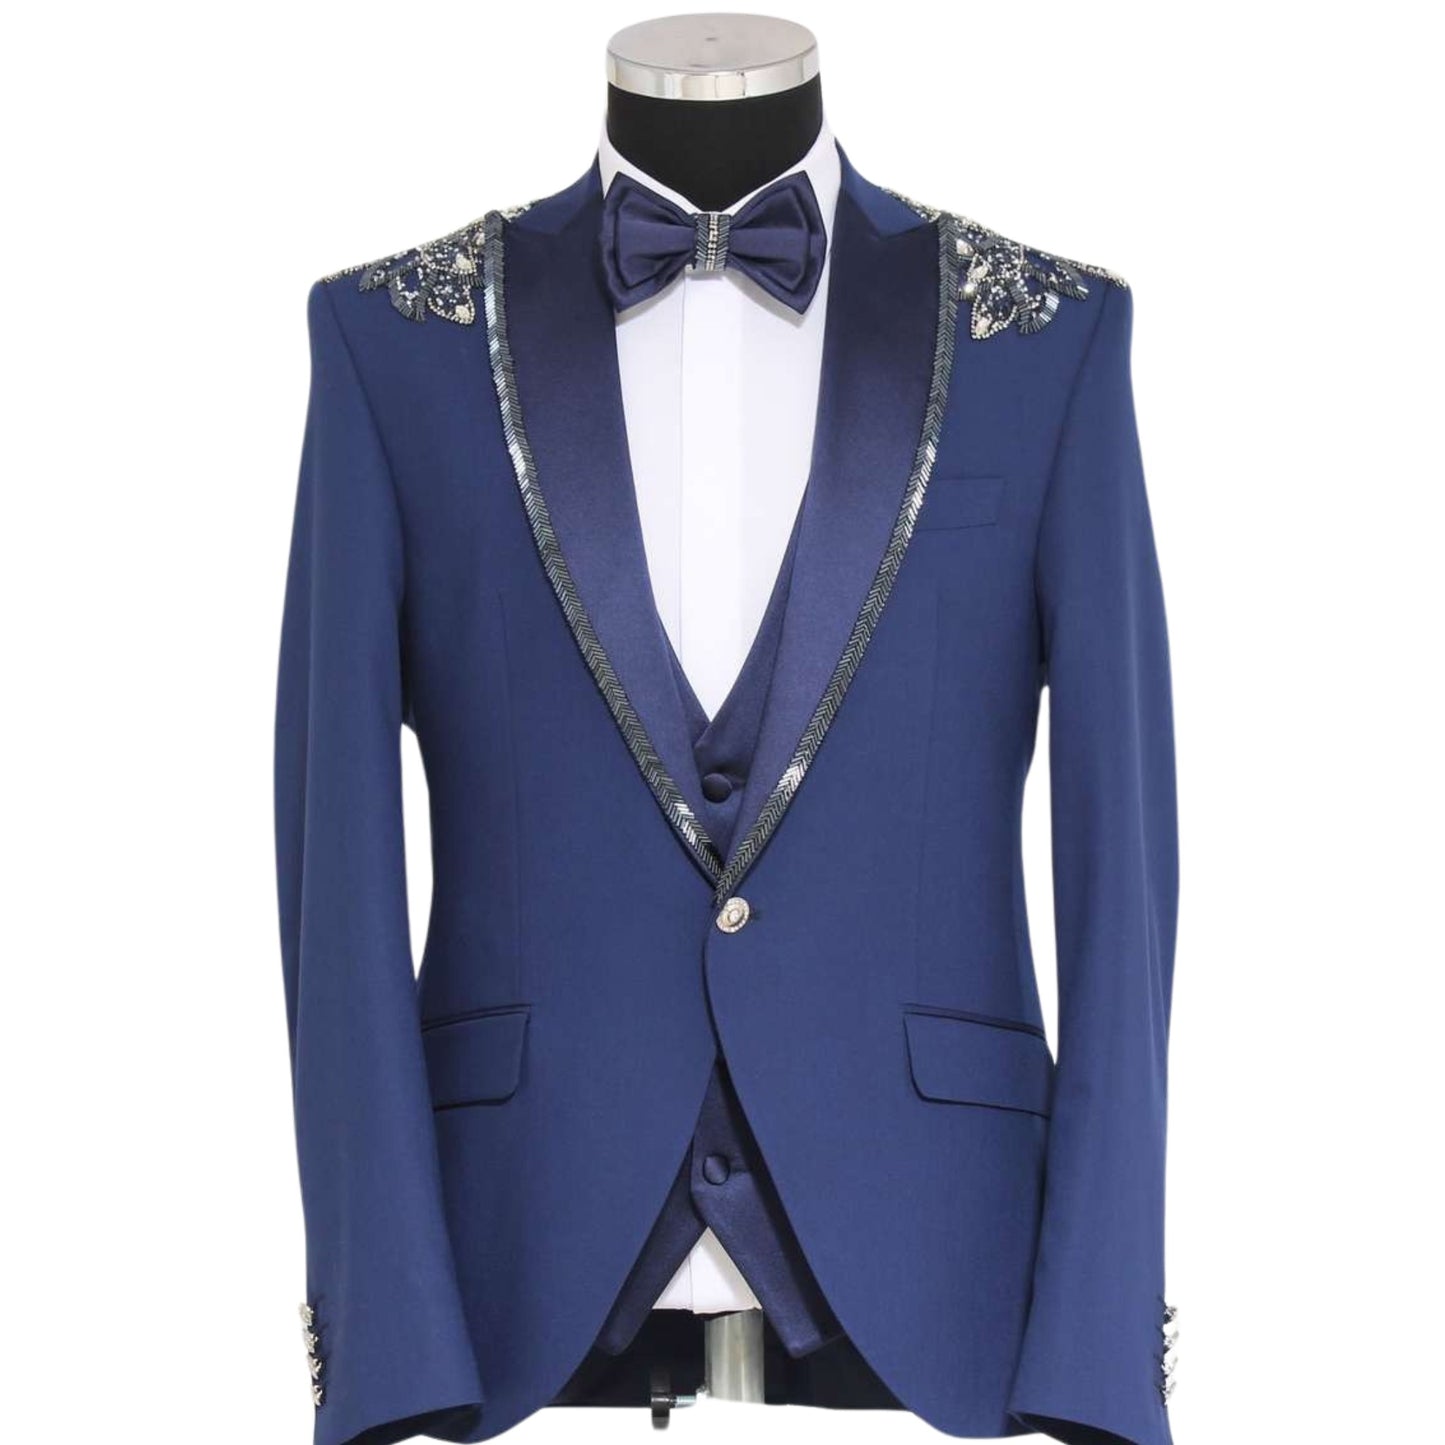 KCT Menswear |Sparkle Silver & Blue Three-Piece Tuxedo -Prom | Wedding ...